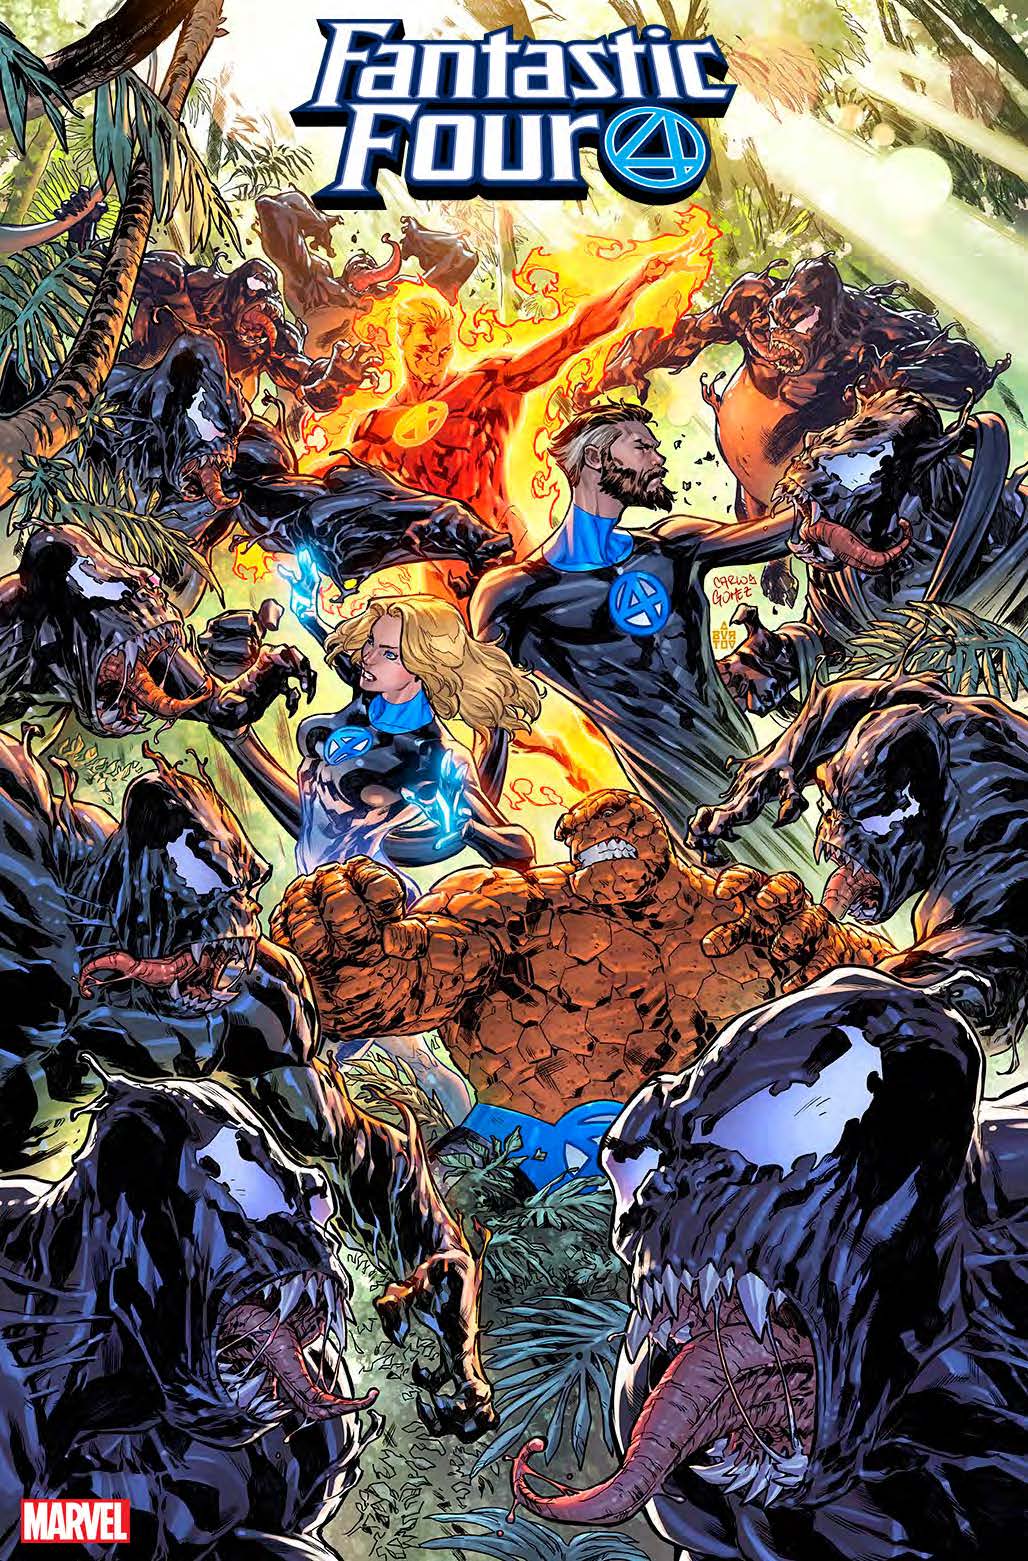 Fantastic Four #17